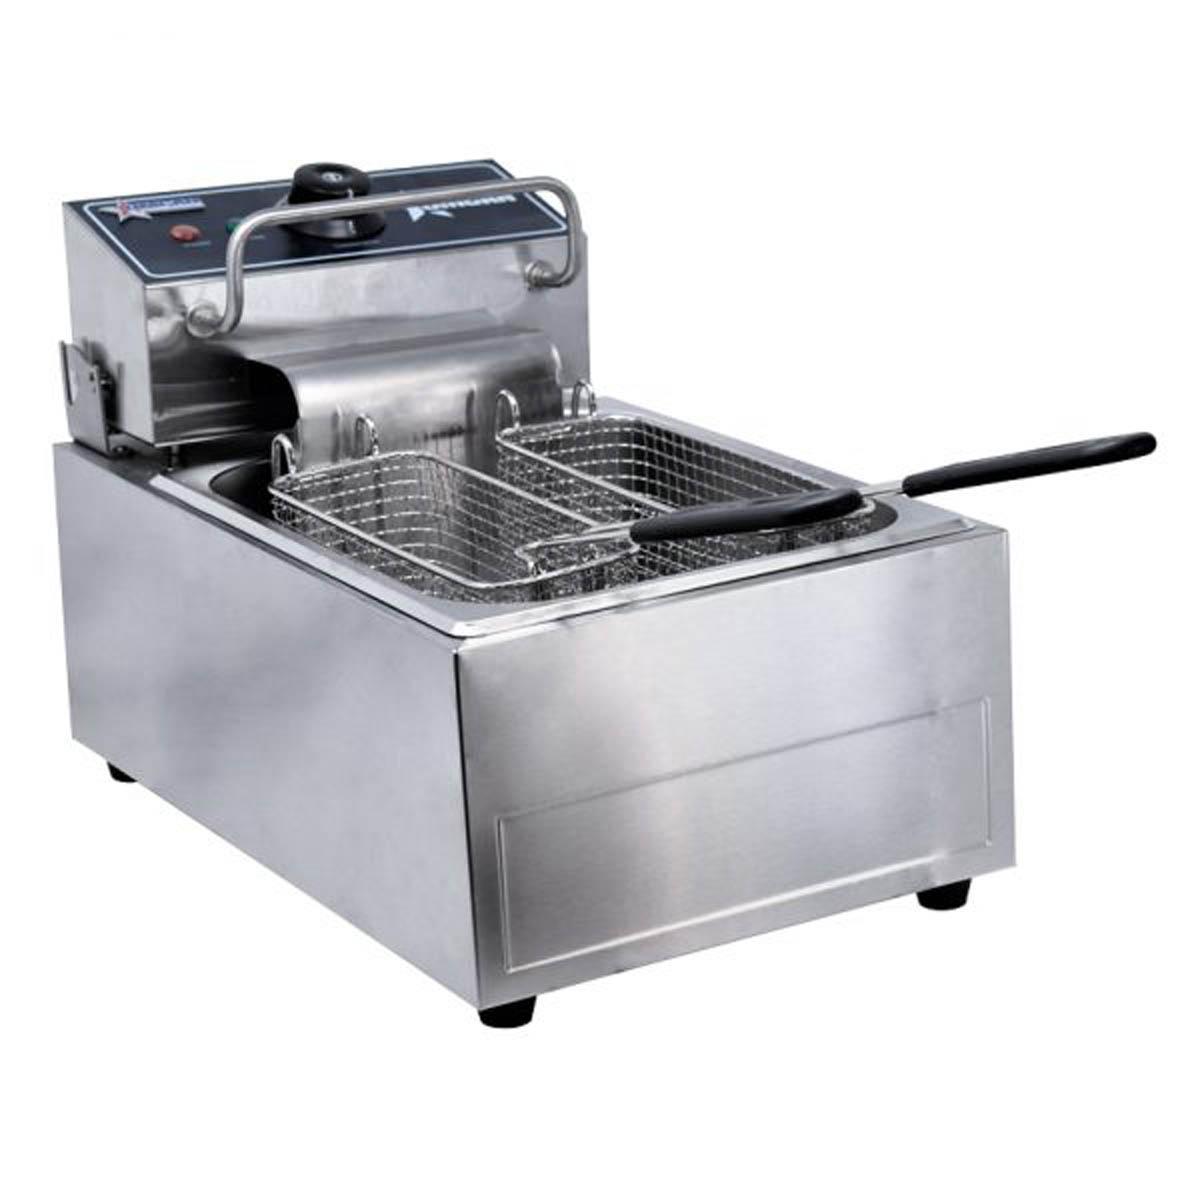 Omcan USA 39371 Full Pot Countertop Electric Fryer w/ 13.23-Lb. Capacity, 2 Baskets, 220V/60/1